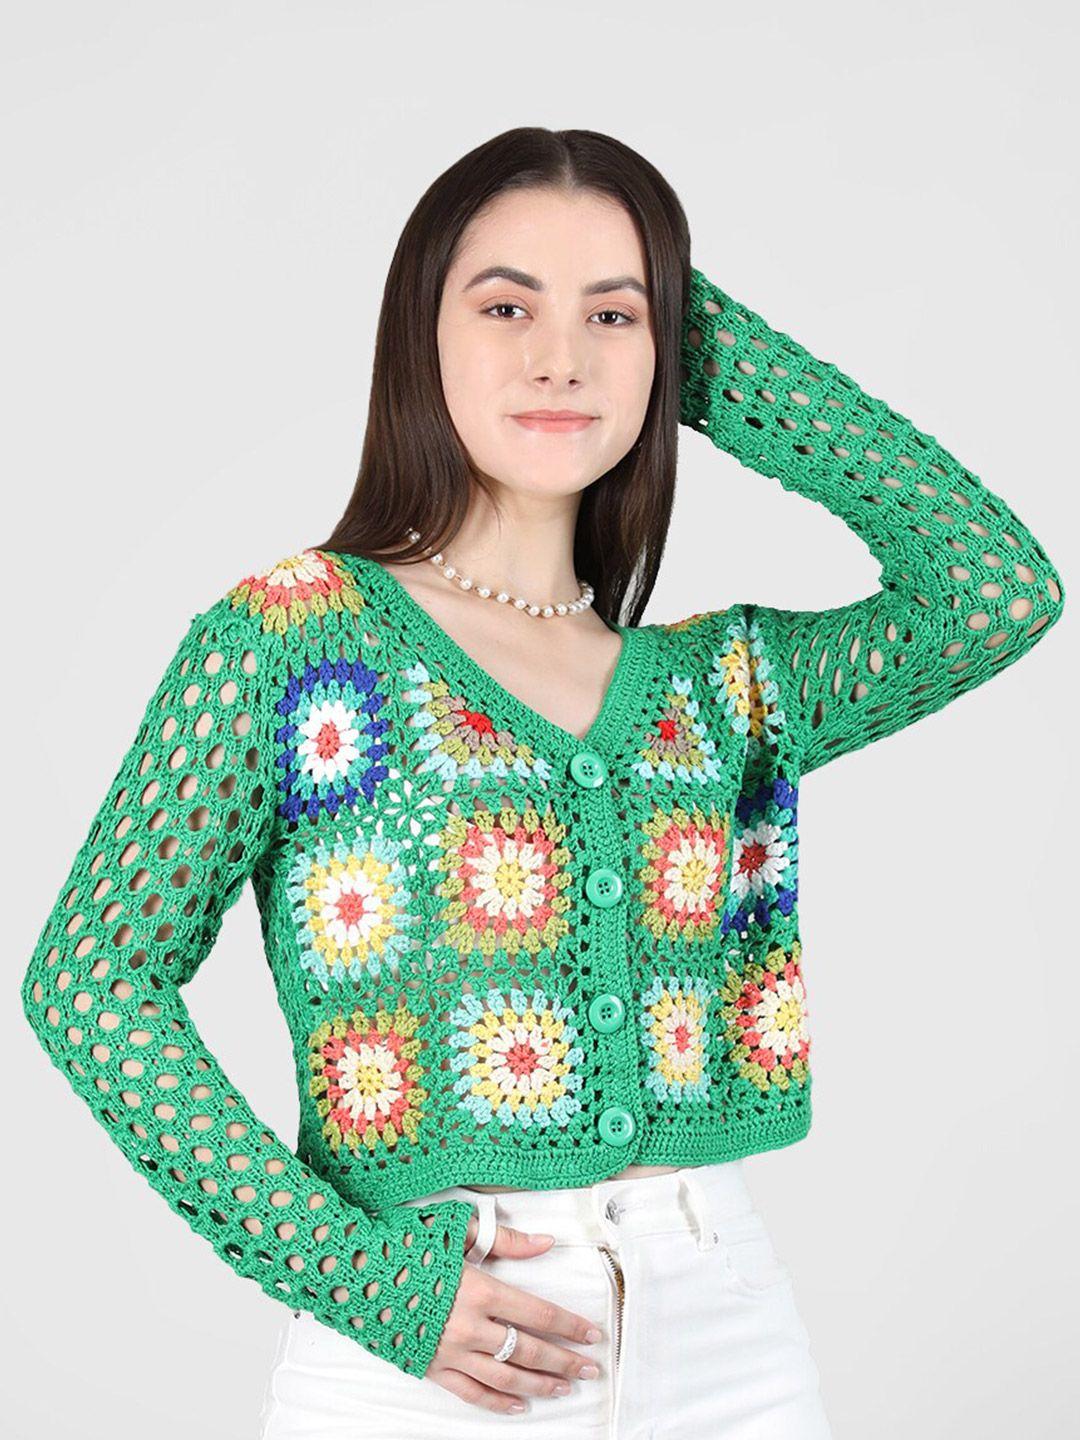 dlanxa floral print woollen crochet shirt style top